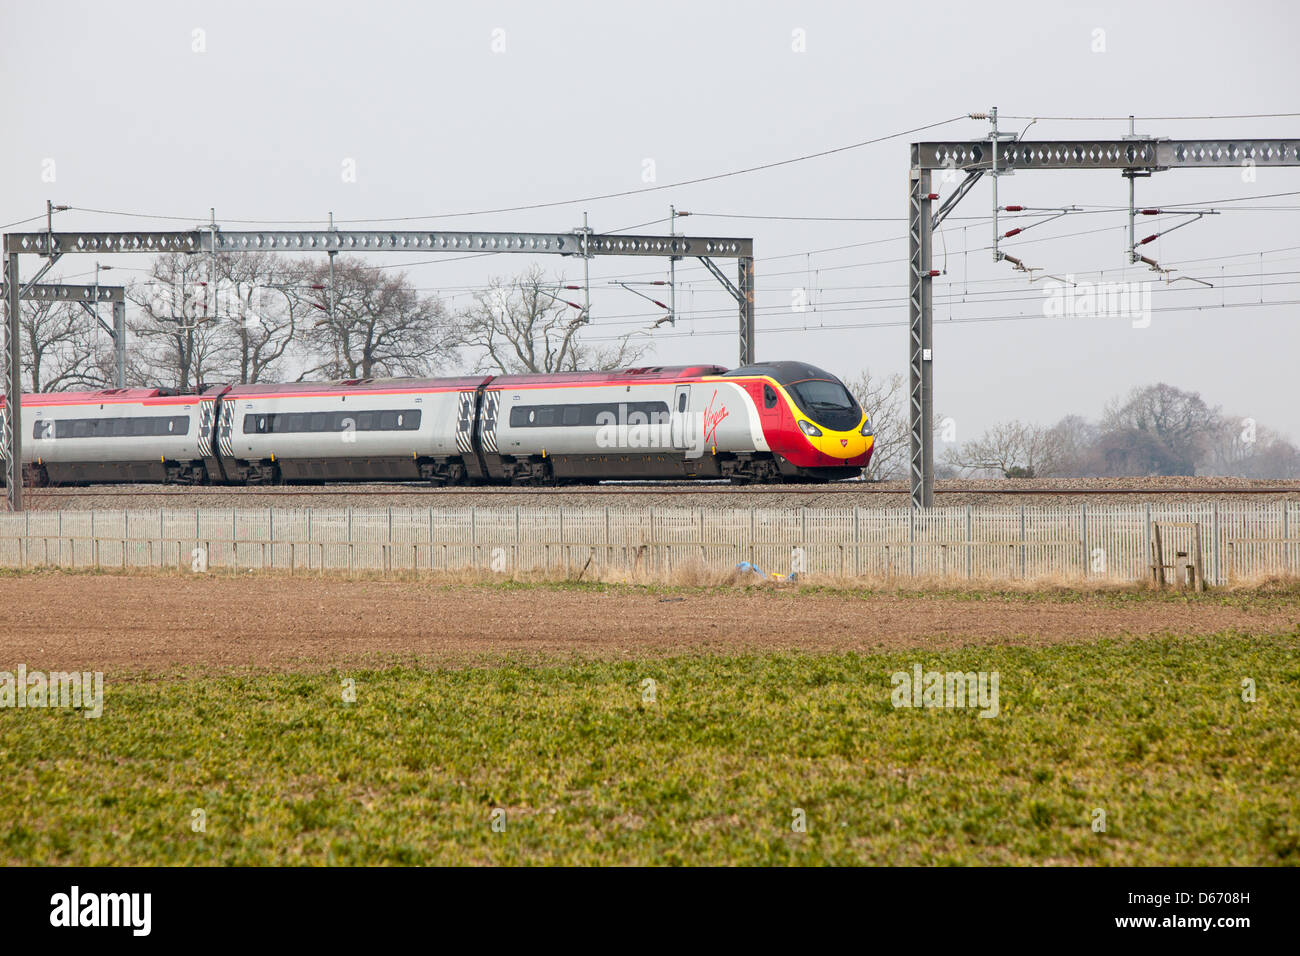 A Virgin train running through the countryside adjacent to farmland. Stock Photo